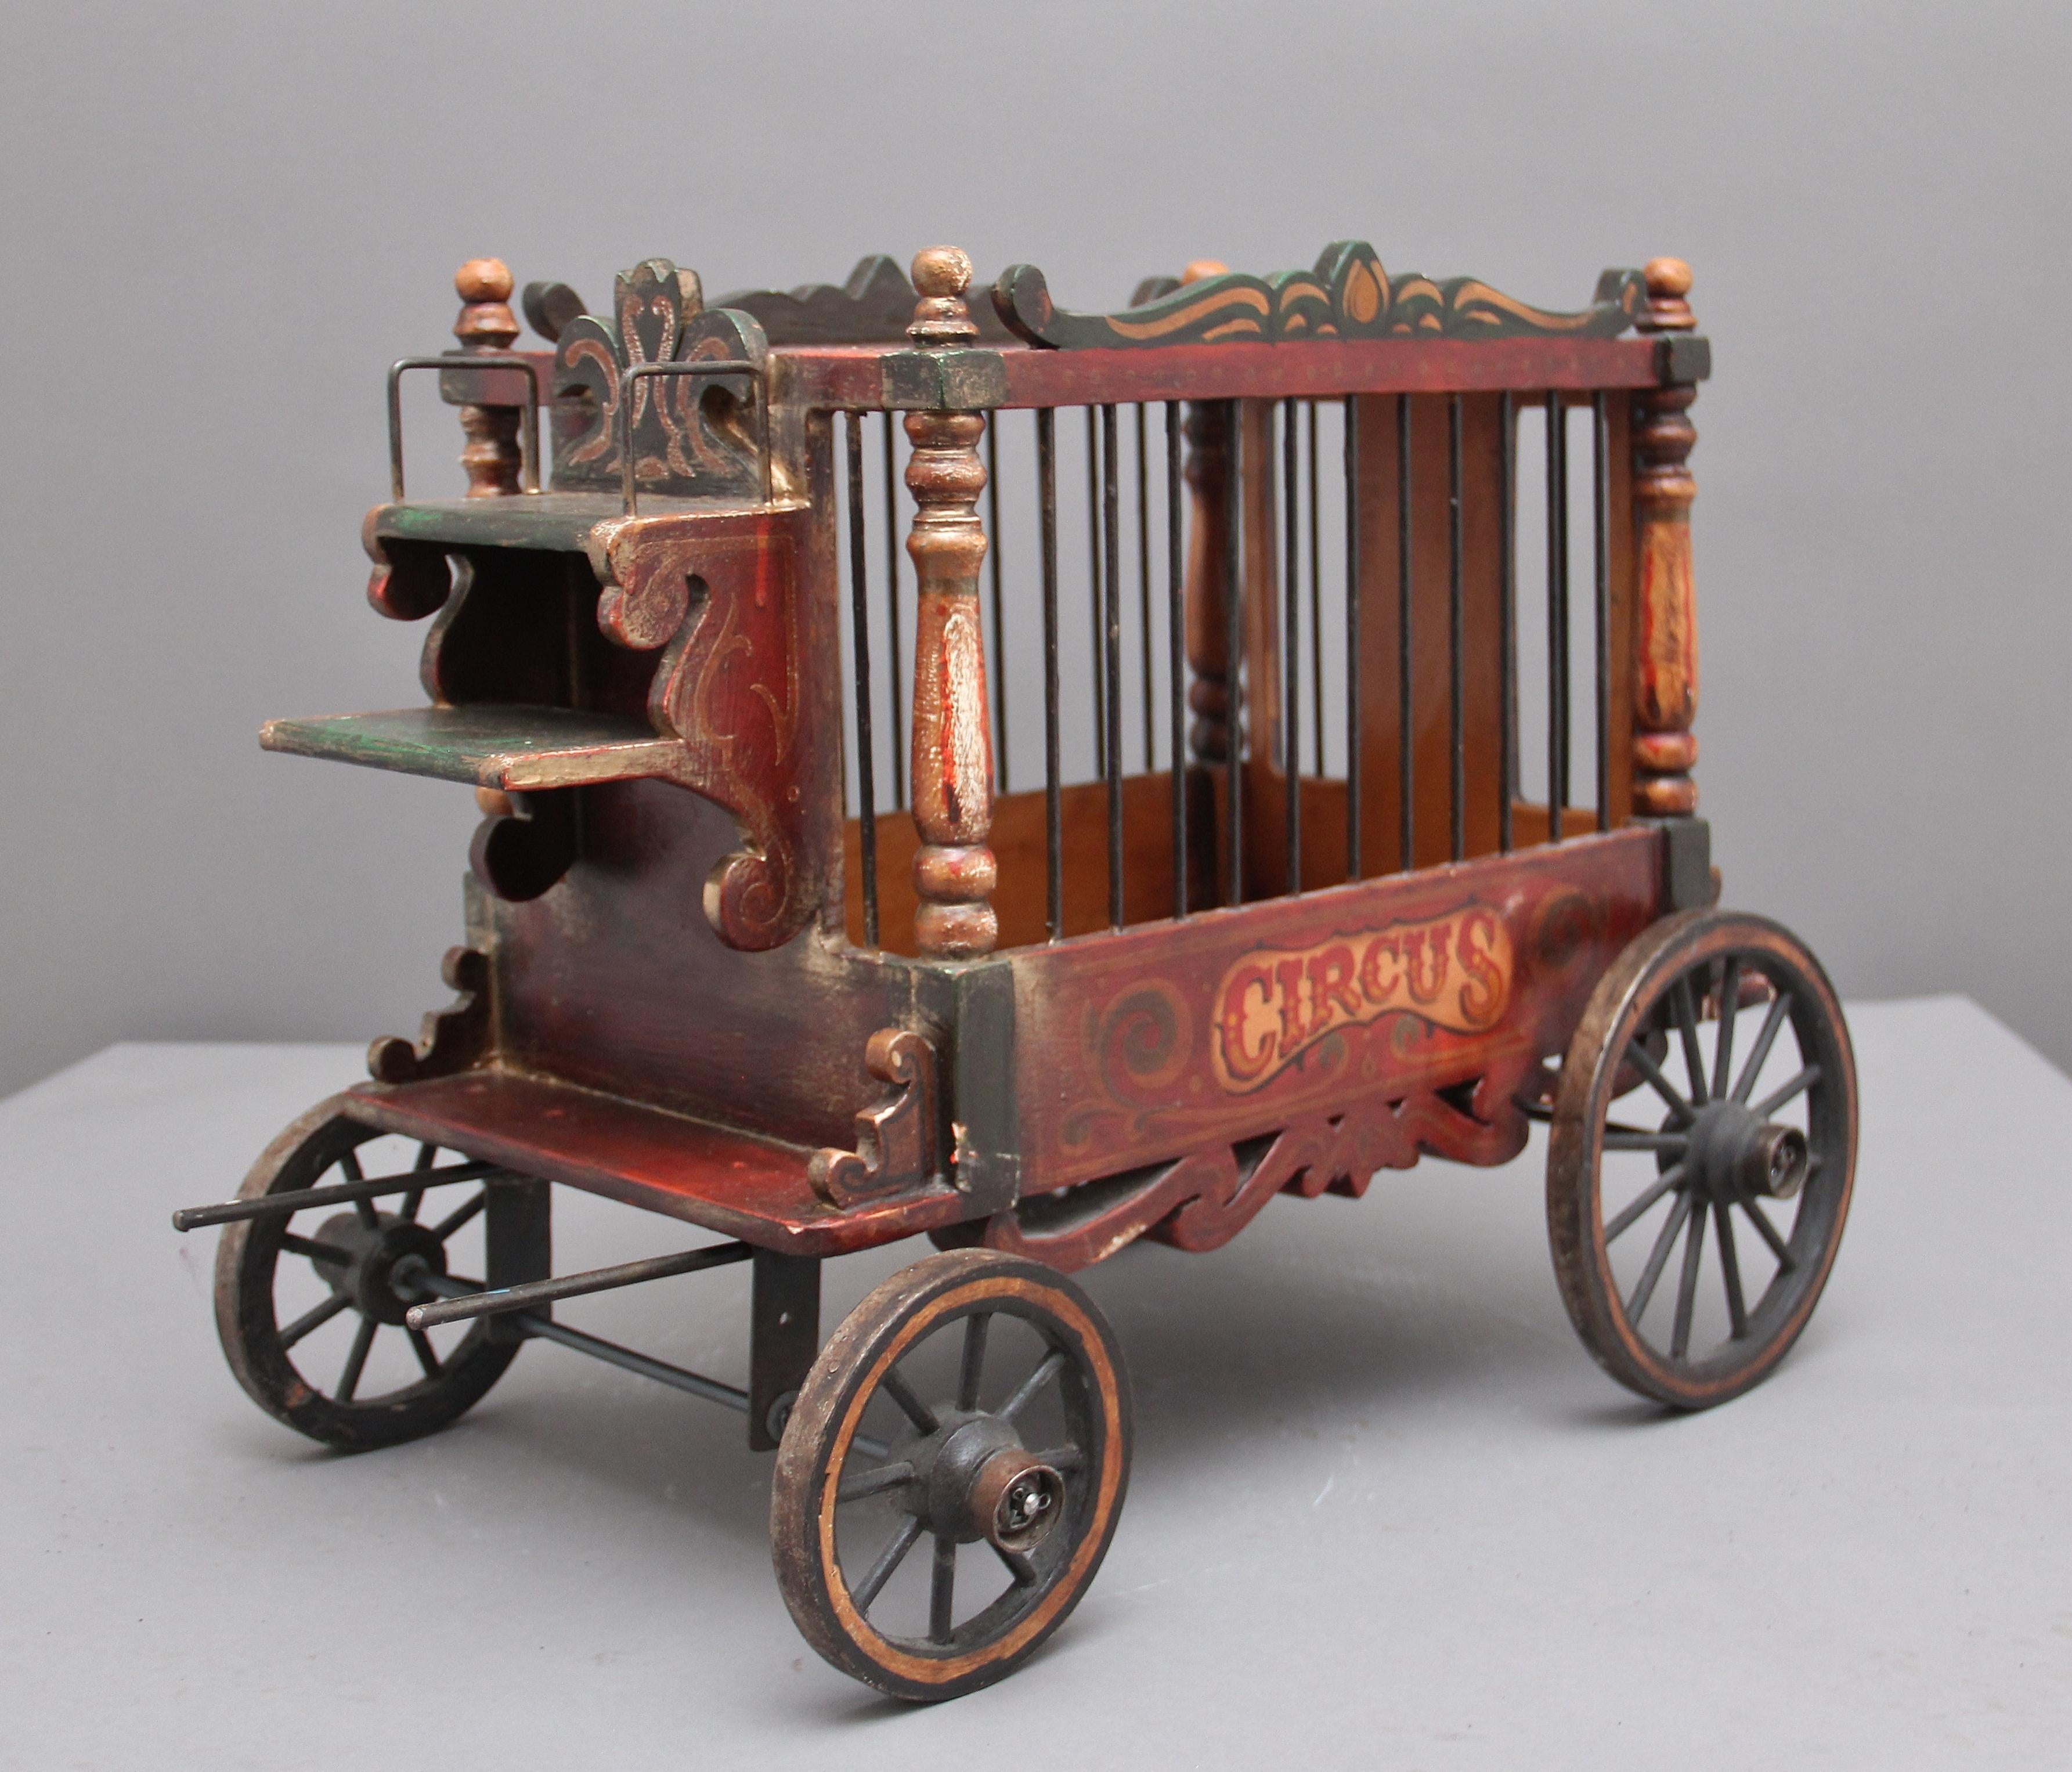 Hardwood Early 20th Century Model of a Circus Wagon